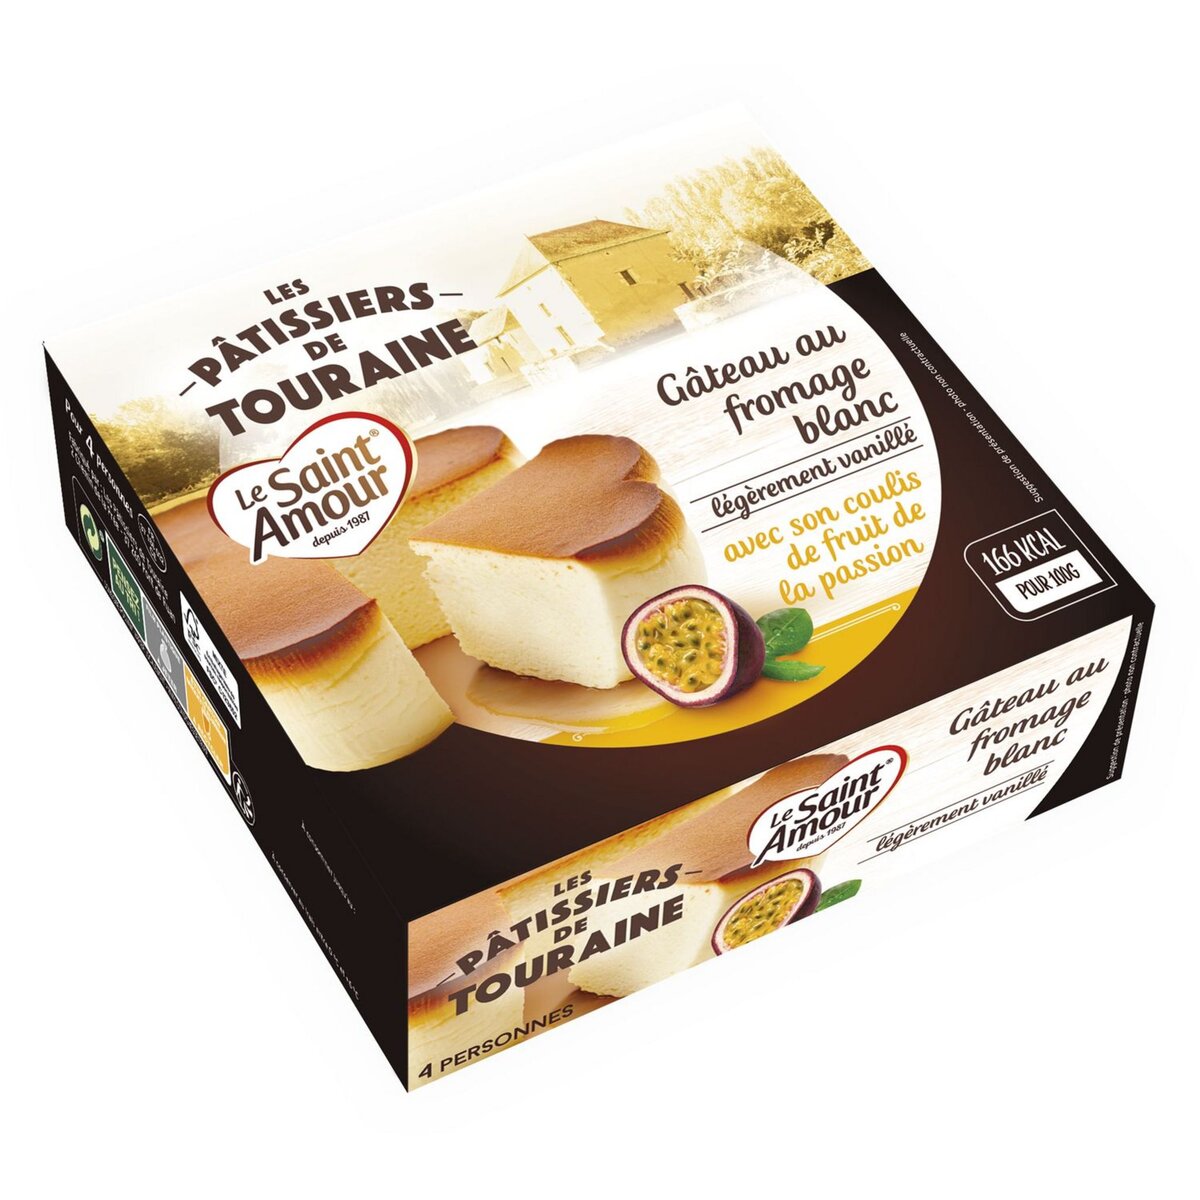 ST AMOUR St Amour gâteau au fromage blanc coulis fruits passion 350g